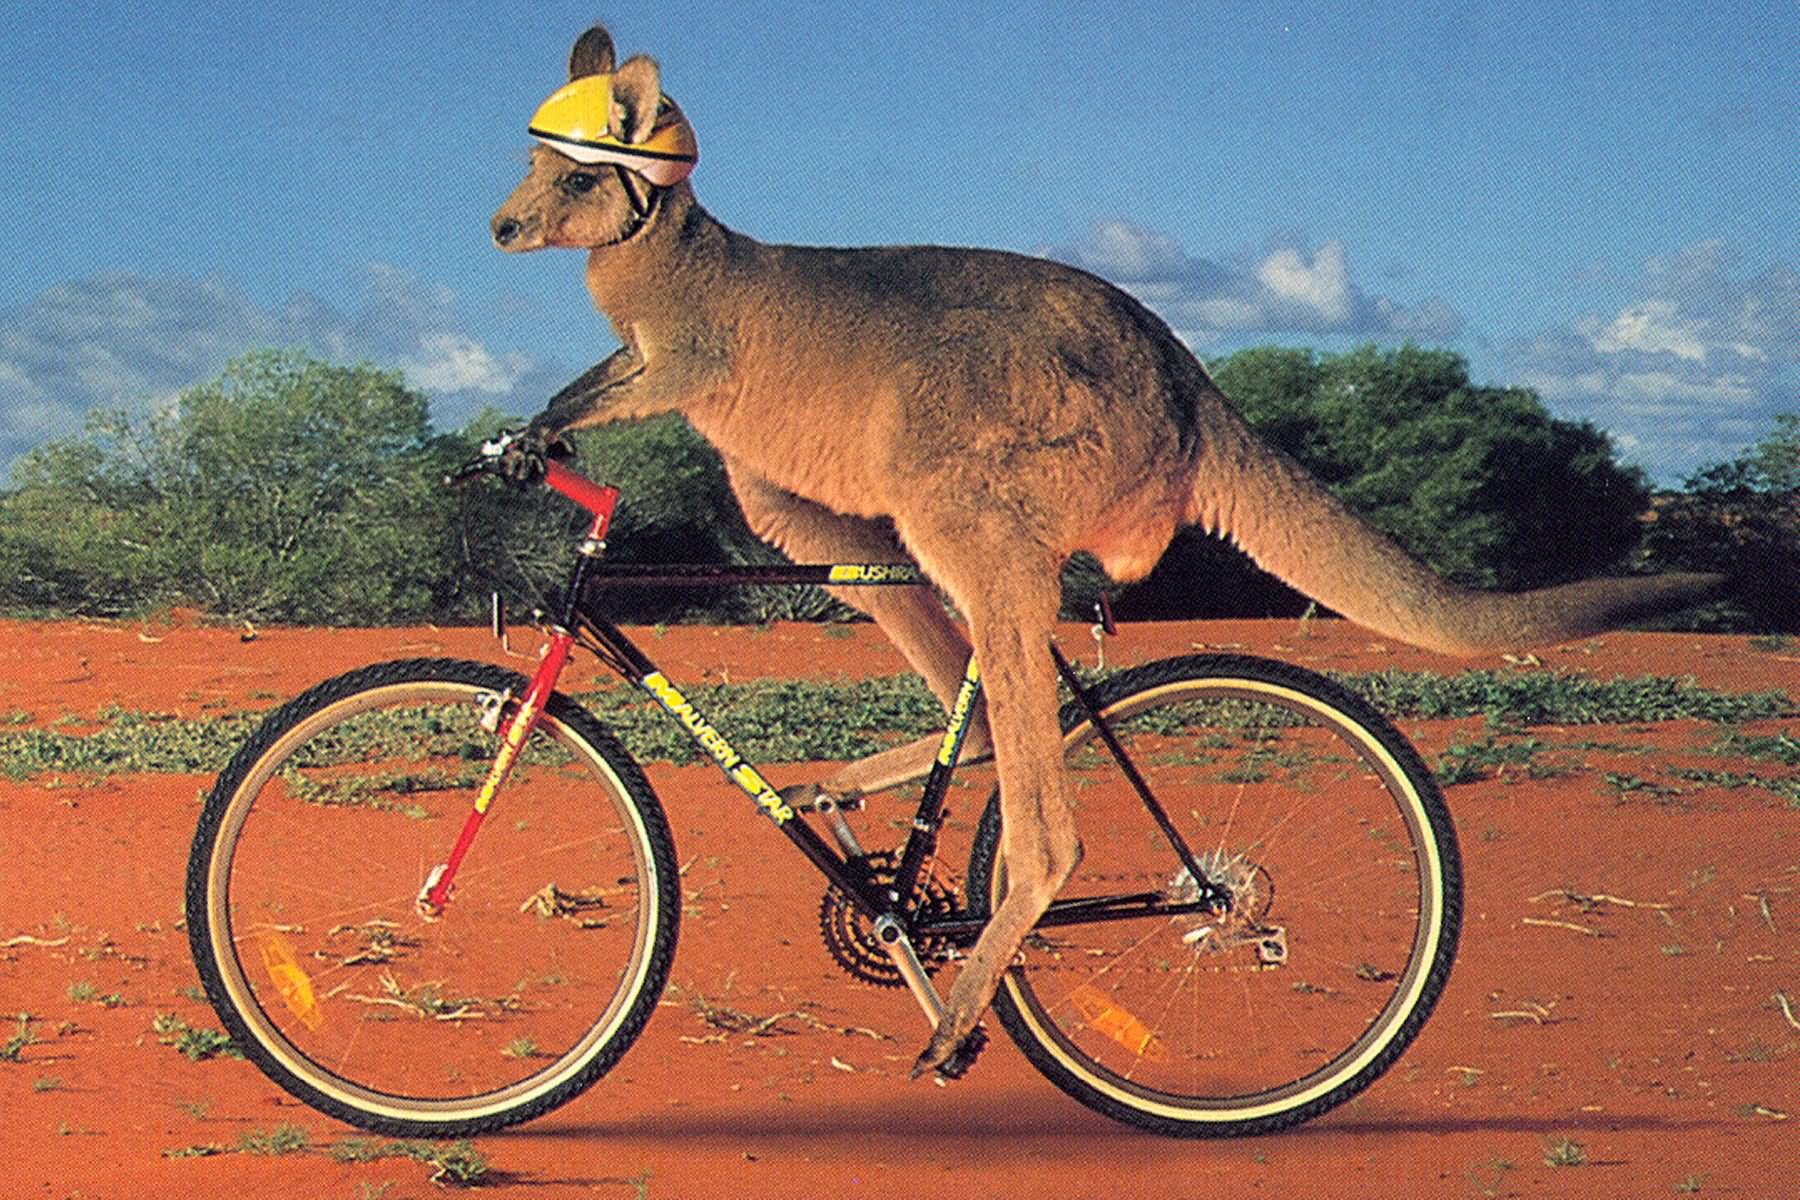 Kangaroo Riding Bicycle Funny Image